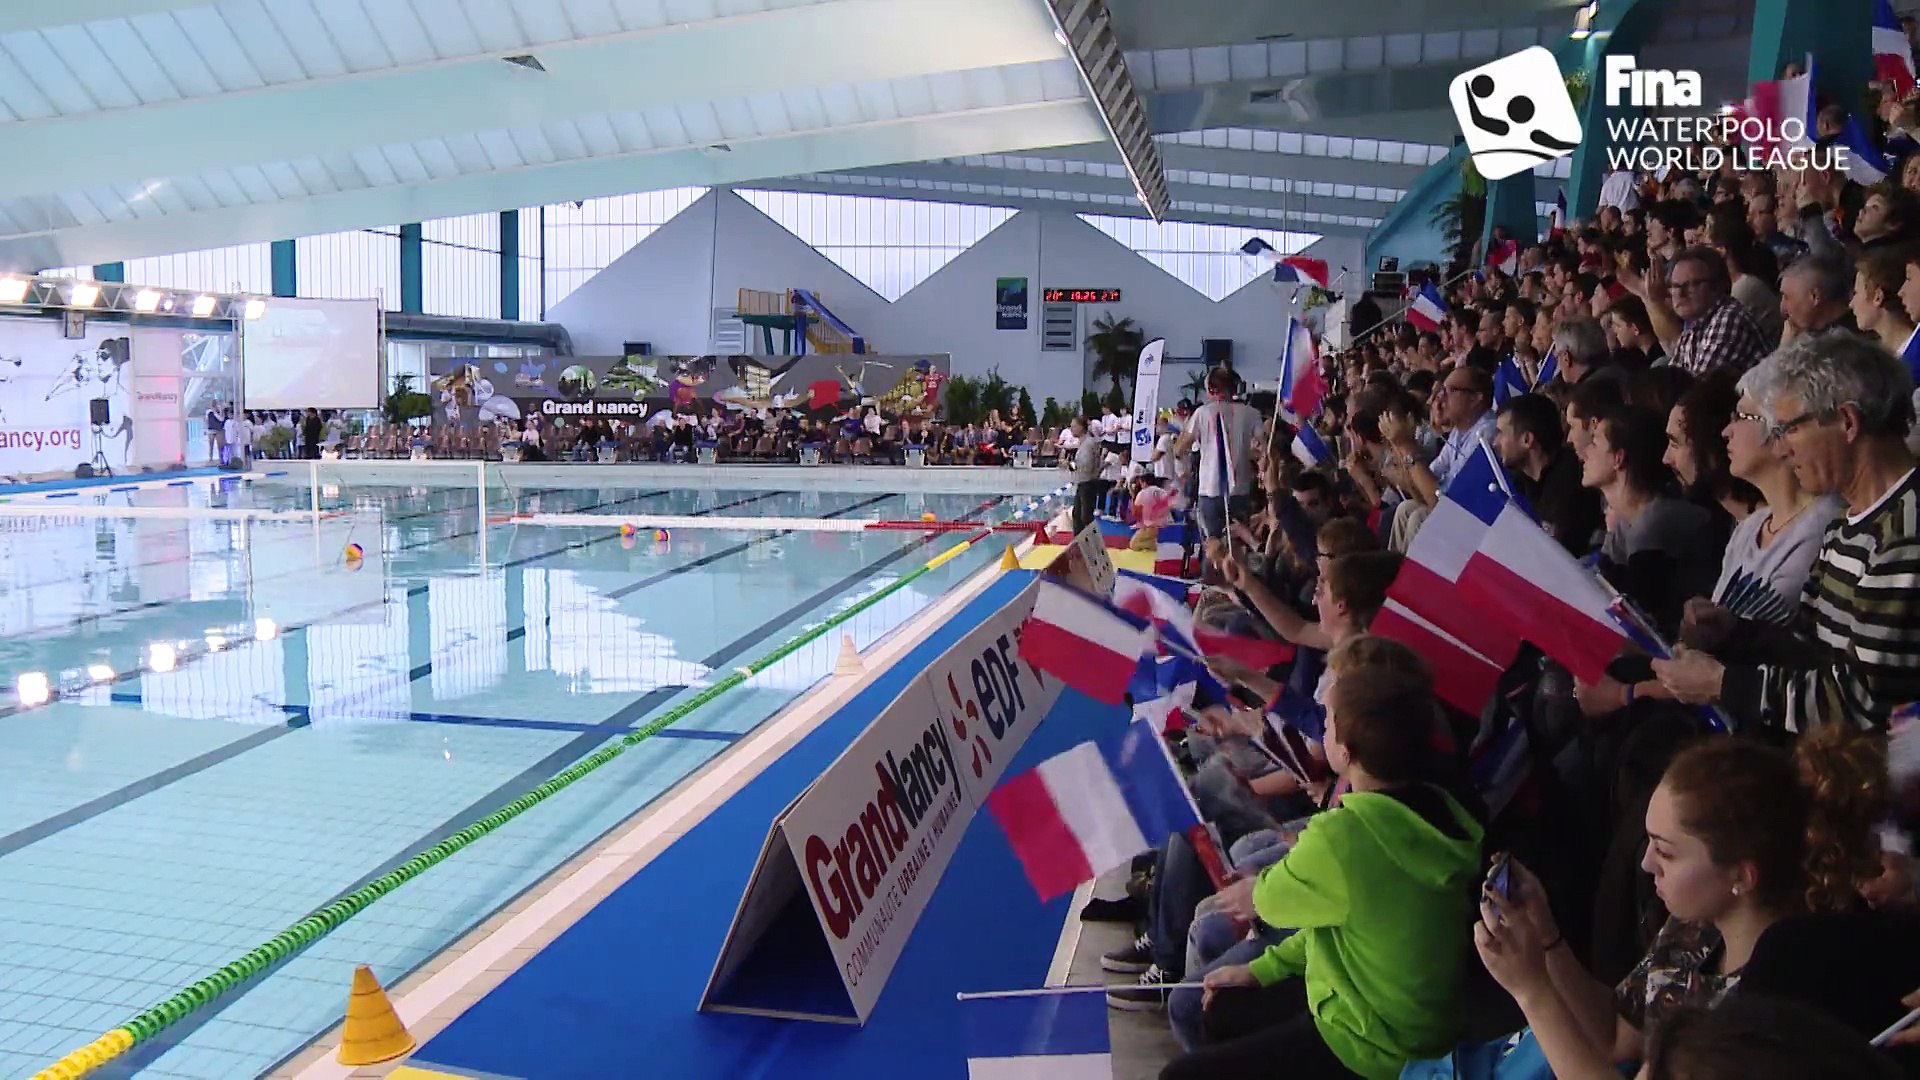 Replay : France Montenegro - Water polo world league - Vidéo Dailymotion